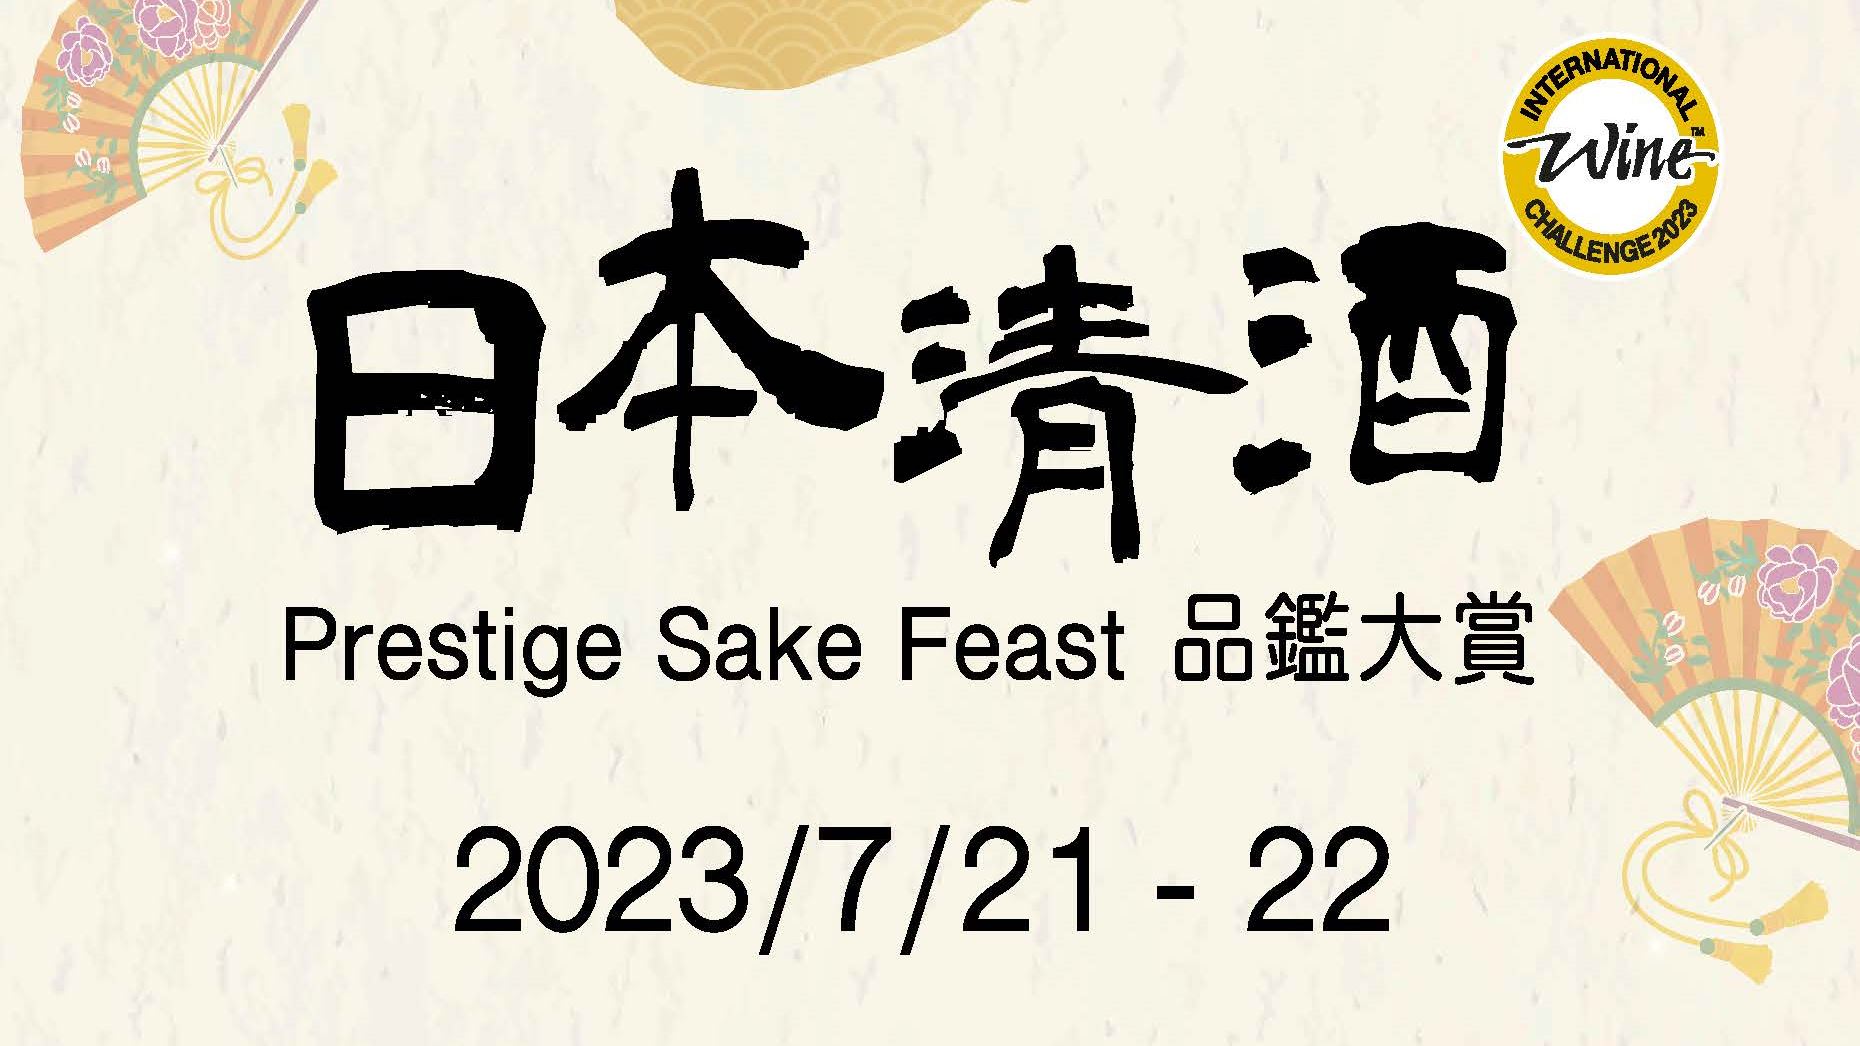 Wynn will be hosting the International Wine Challenge (IWC) Prestige Sake Feast from July 21 to 22